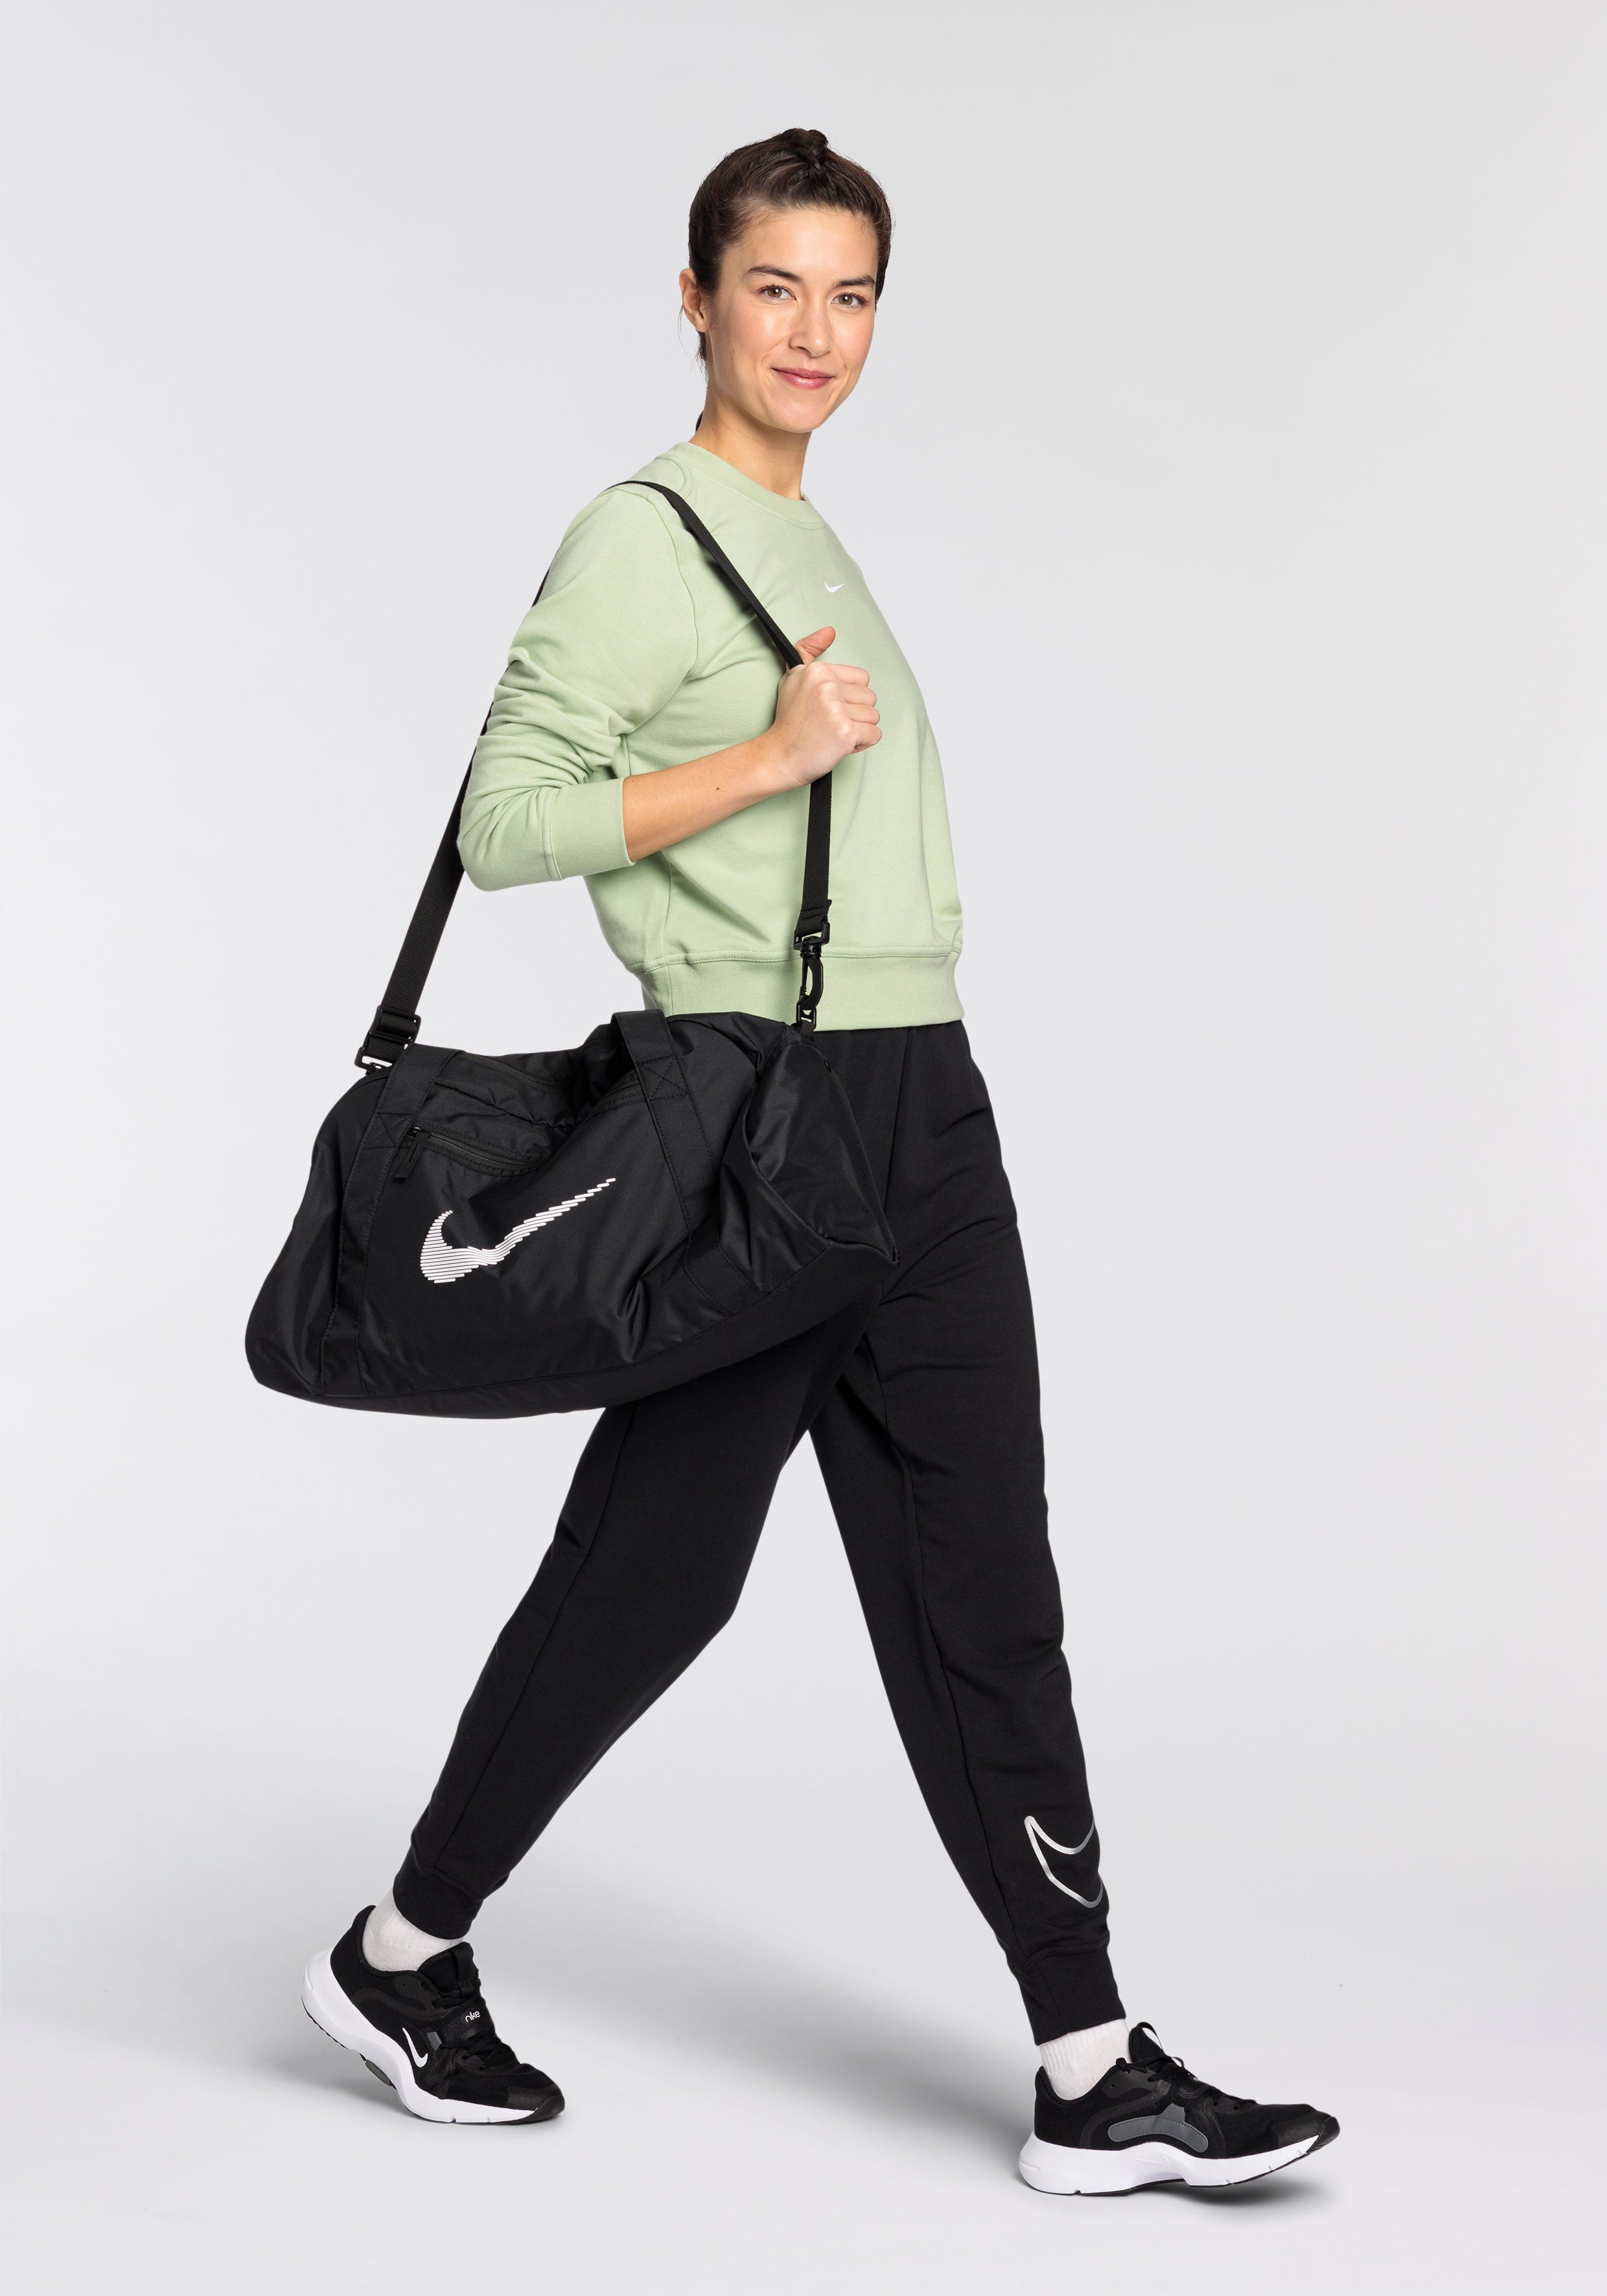 CREW-NECK WOMEN'S Nike LONG-SLEEVED HONEYDEW/WHITE DRI-FIT Trainingsshirt TOP ONE